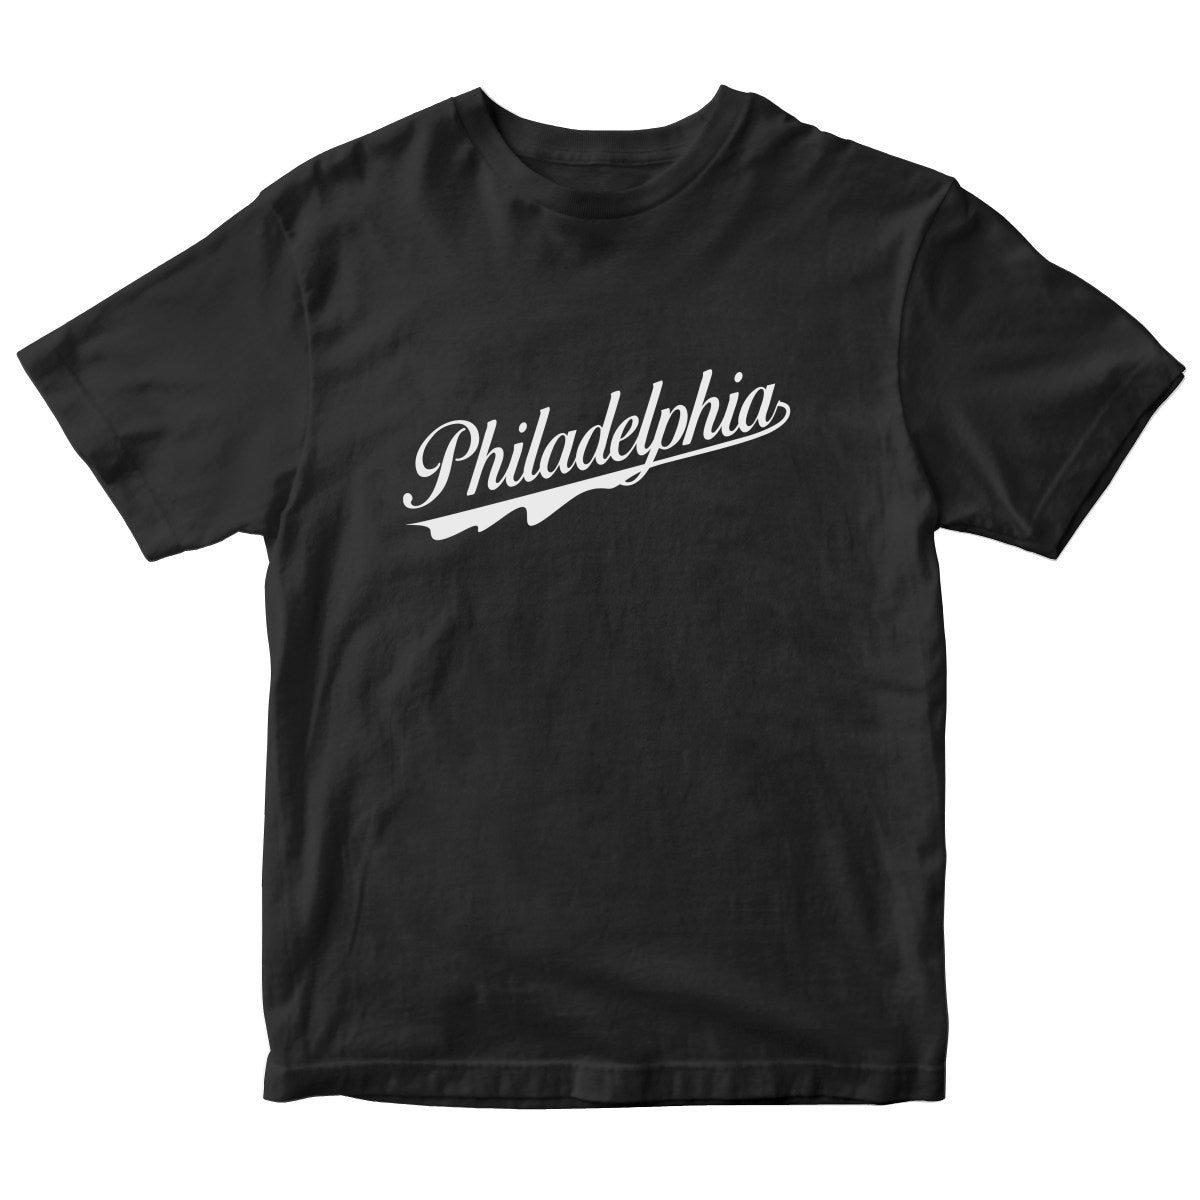 Philadelphia Kids T-shirt